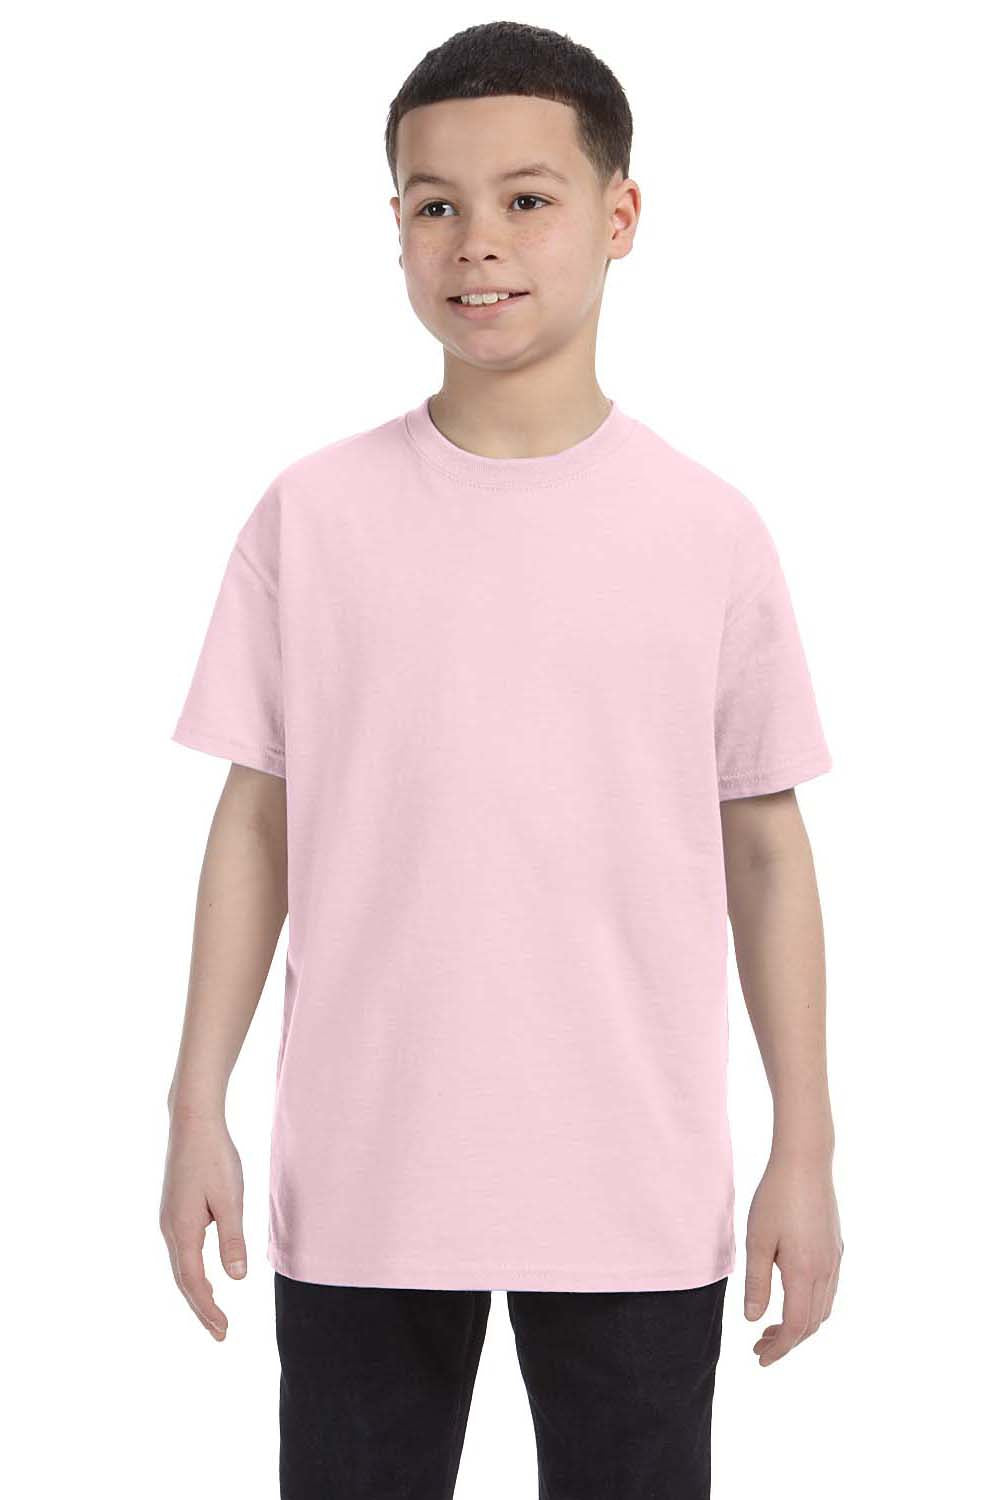 Jerzees 29B Youth Dri-Power Moisture Wicking Short Sleeve Crewneck T-Shirt Classic Pink Front